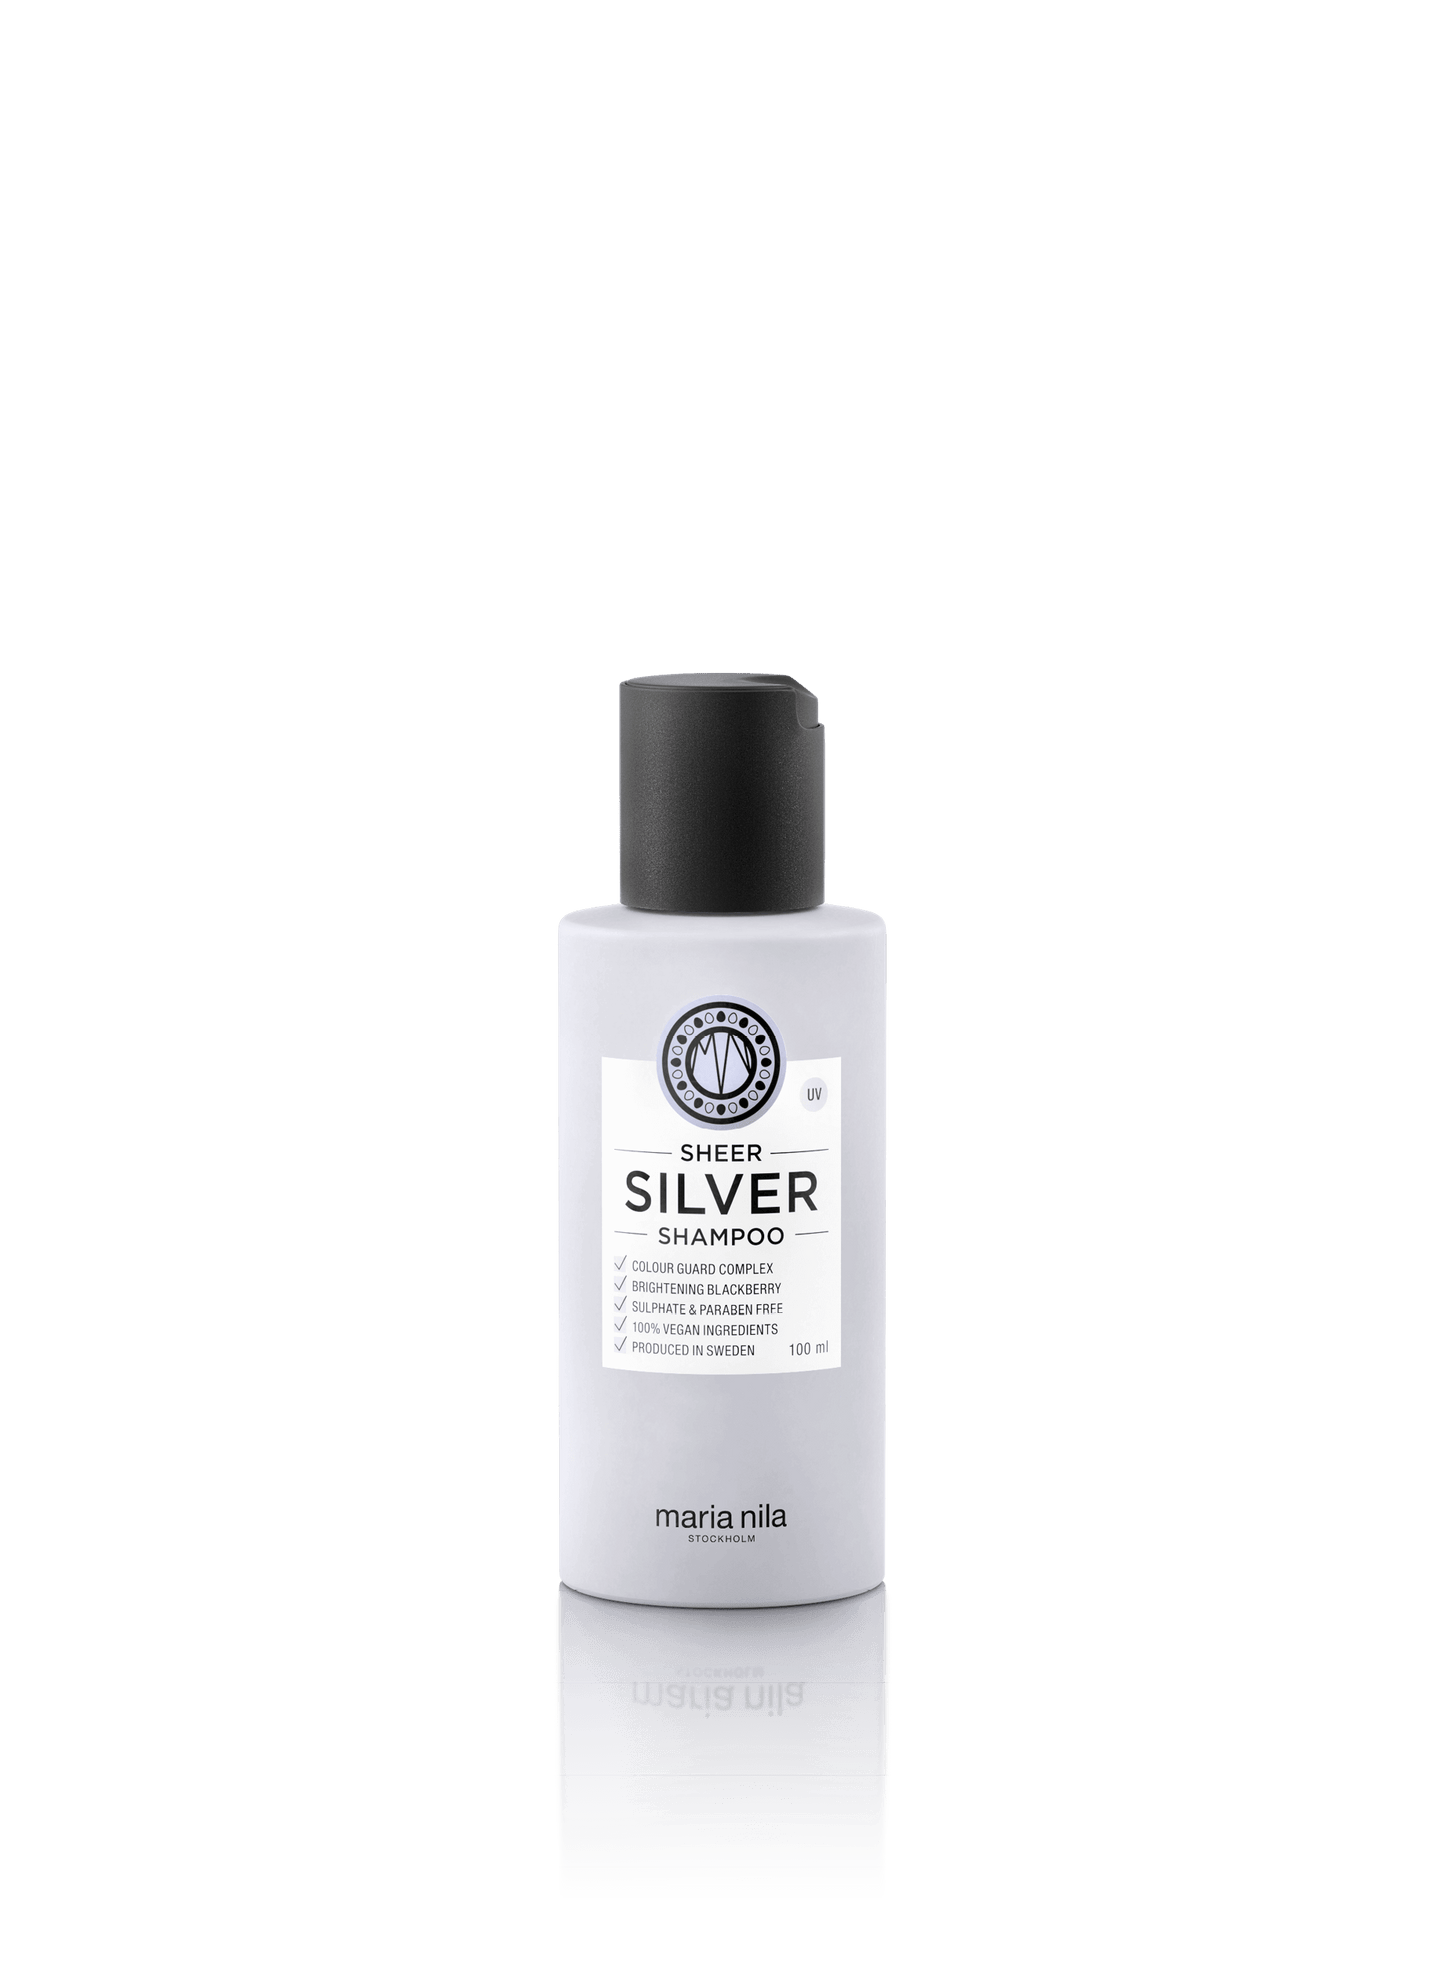 Sheer Silver - Shampoo - Maria Nila